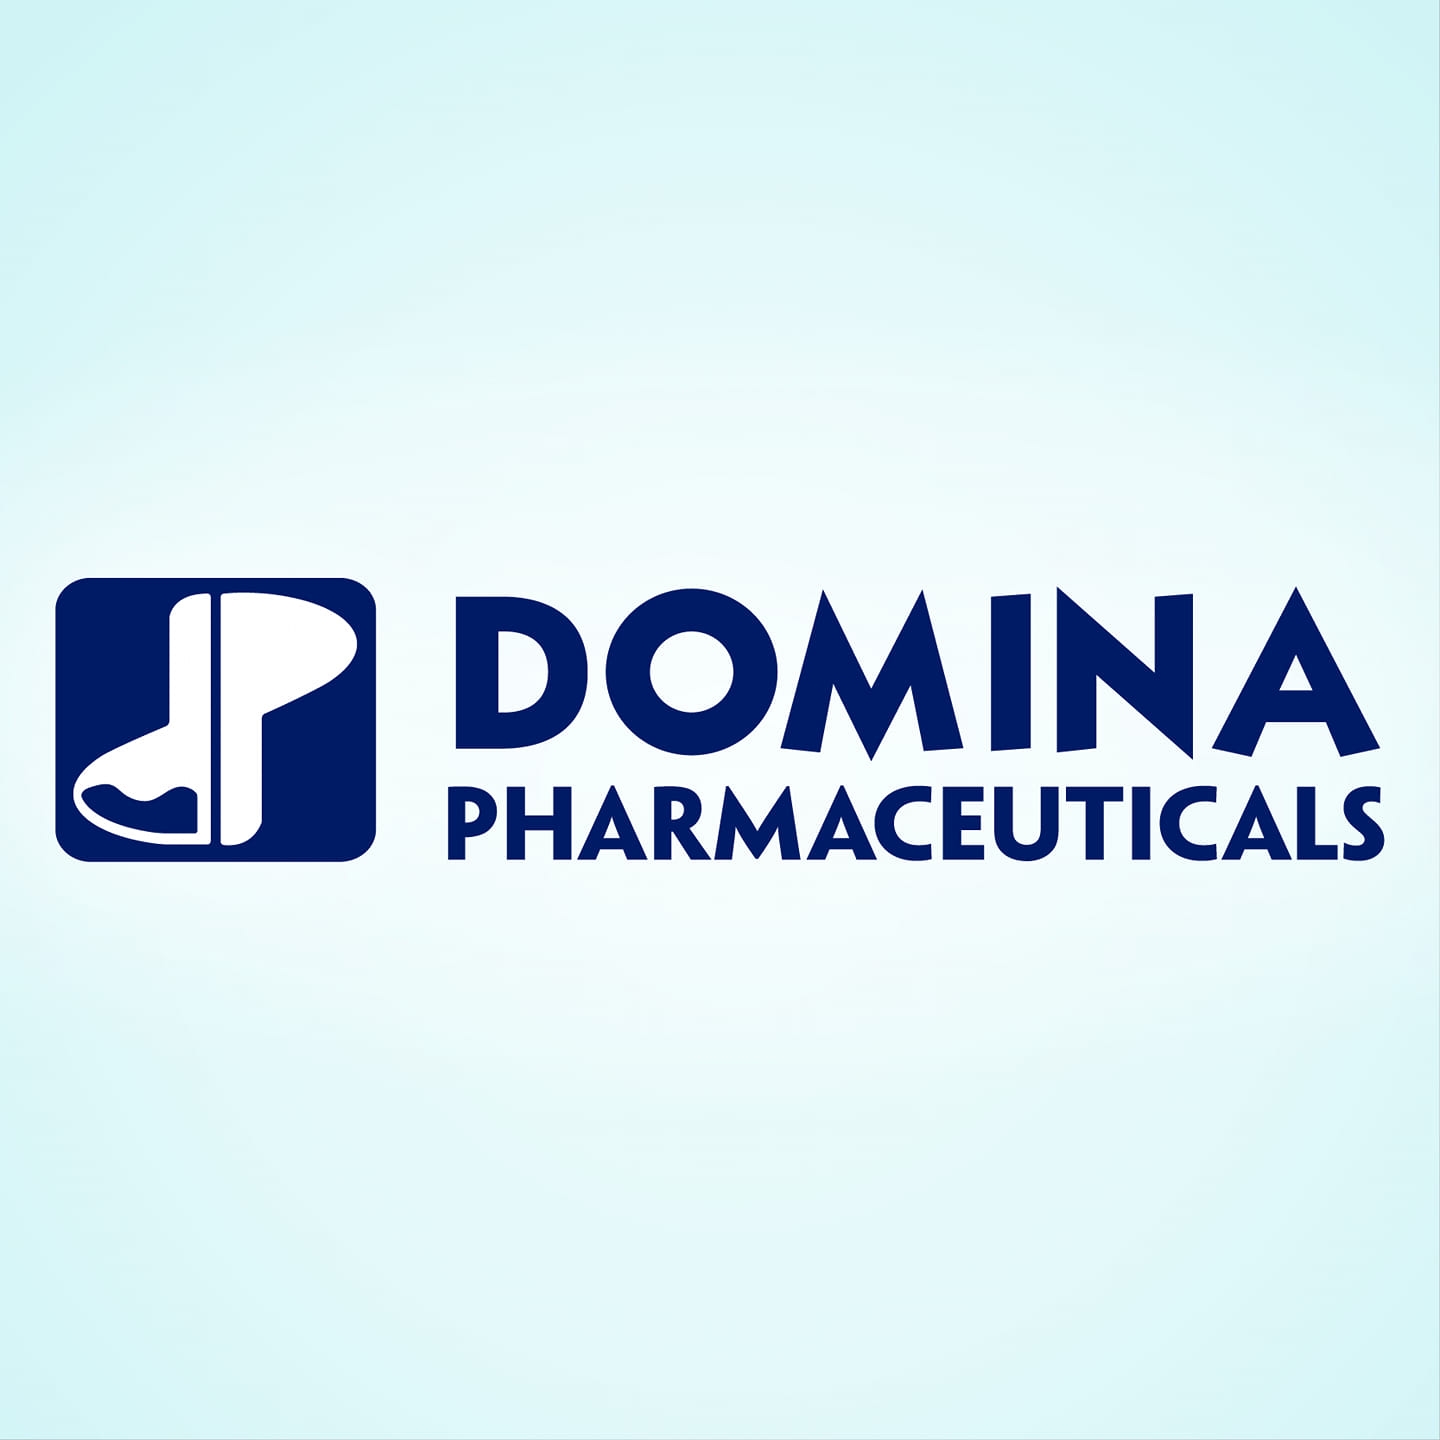  Domina Pharmaceuticals - دومِنا للصناعة الدوائية